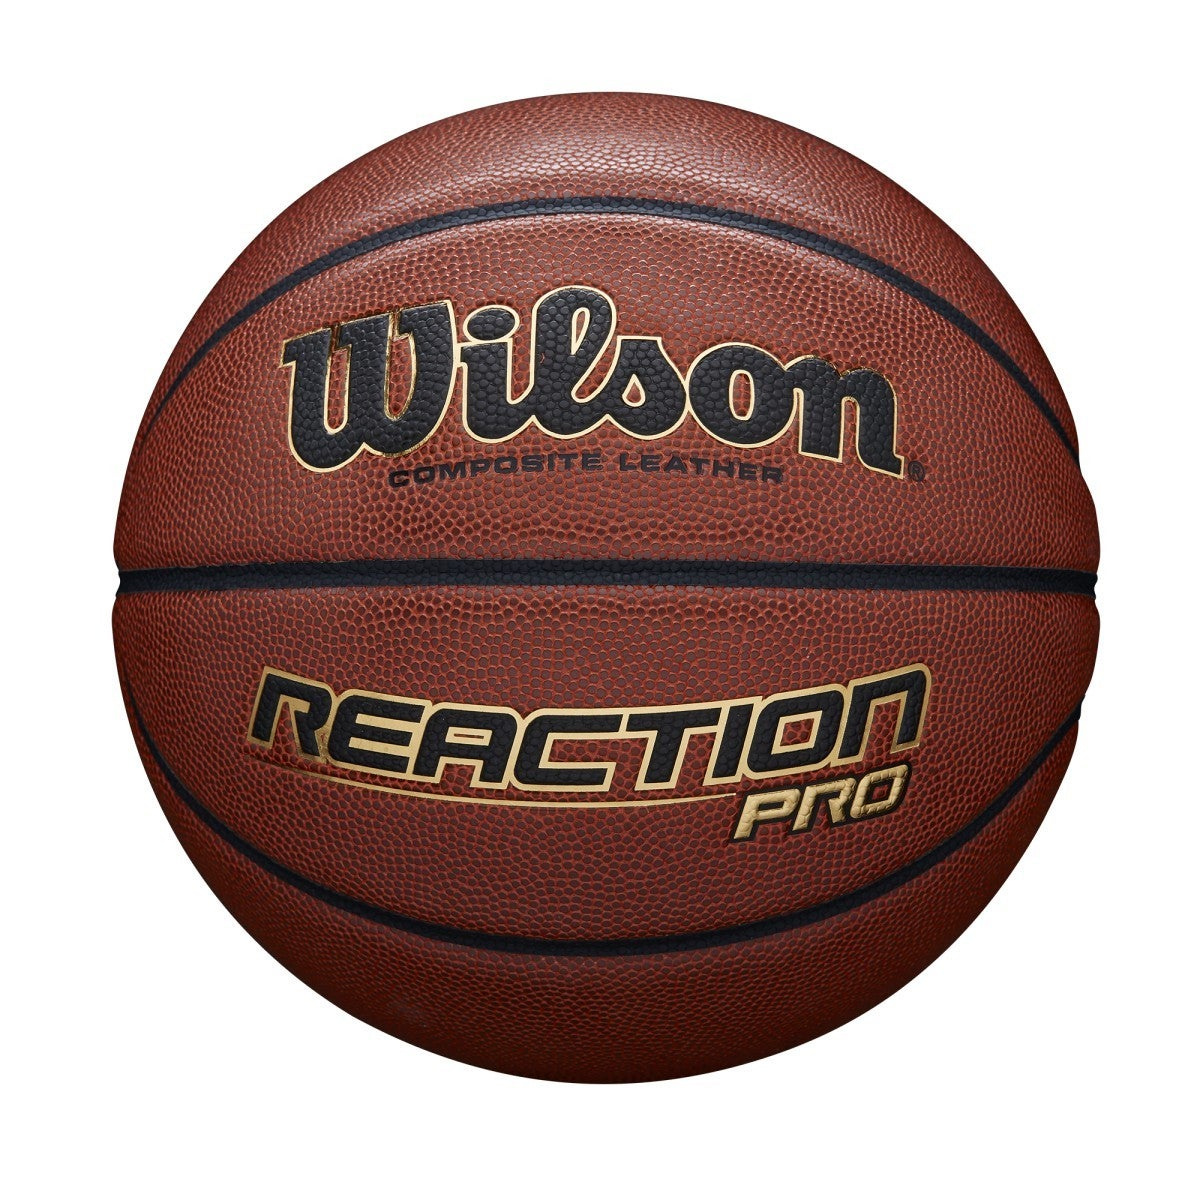 Баскетбольный мяч Wilson Reaction PRO размер 7